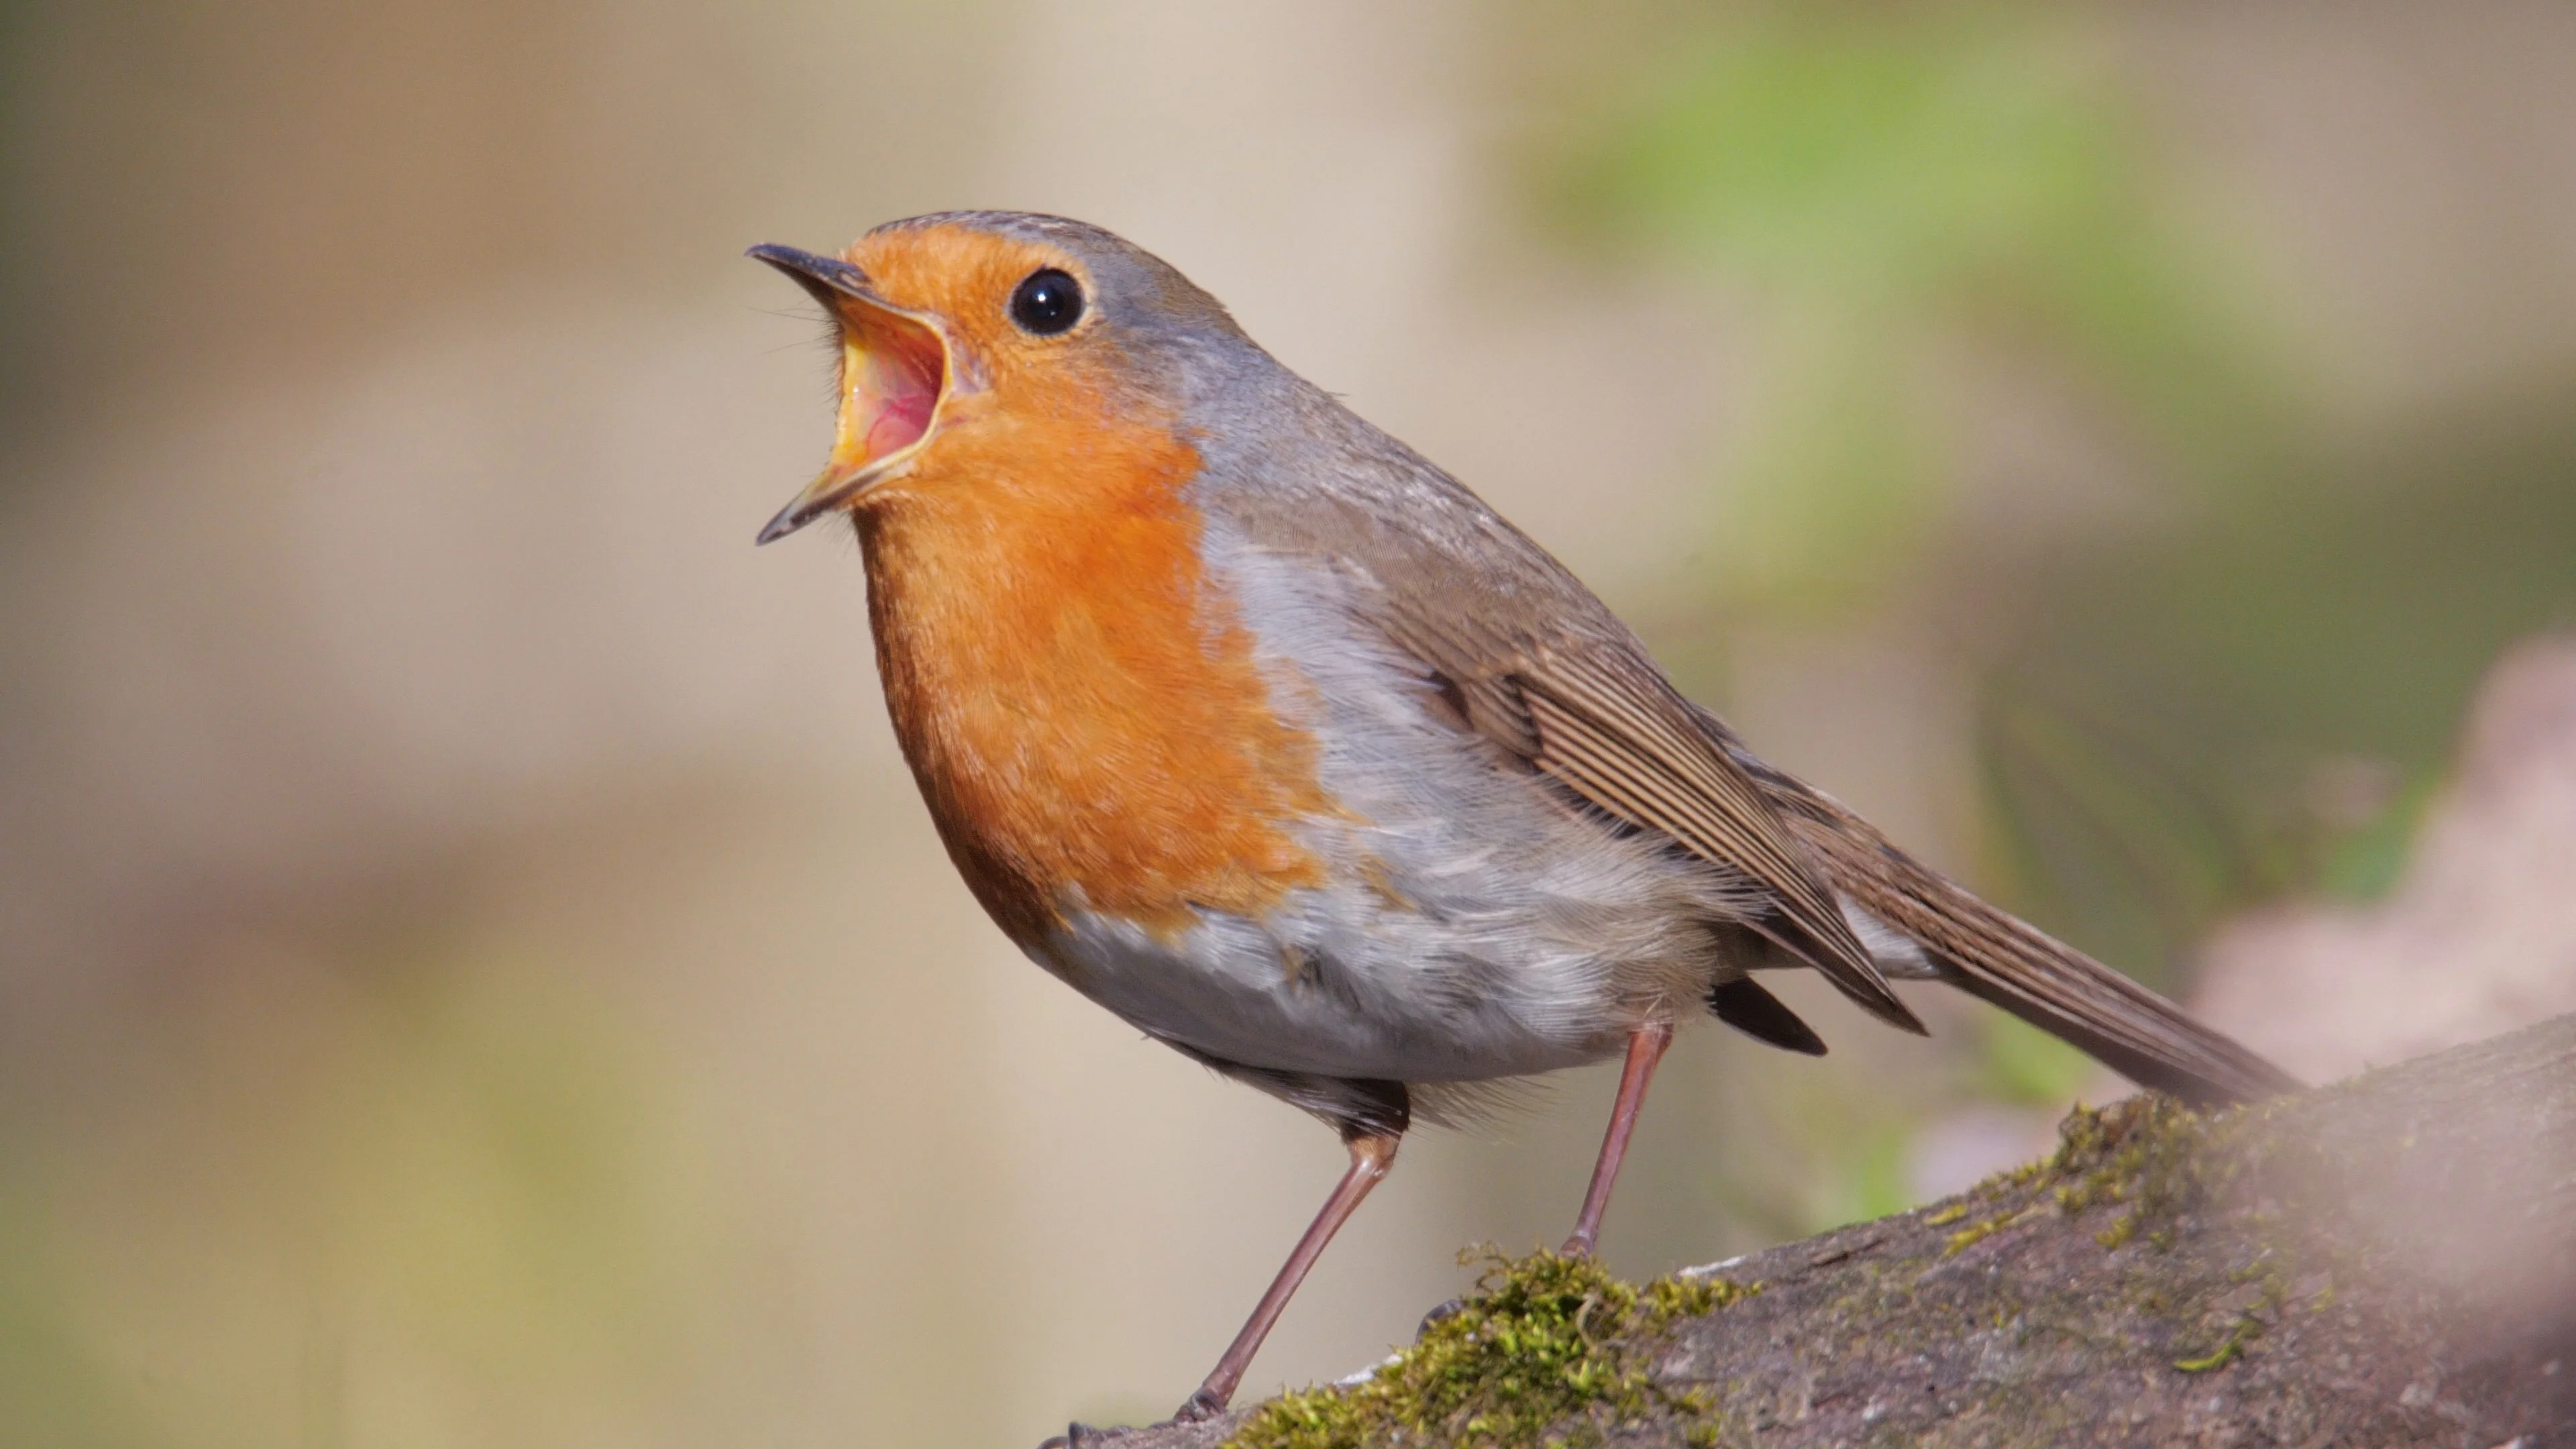 European robin. Singing bird in spring. , Stock Video